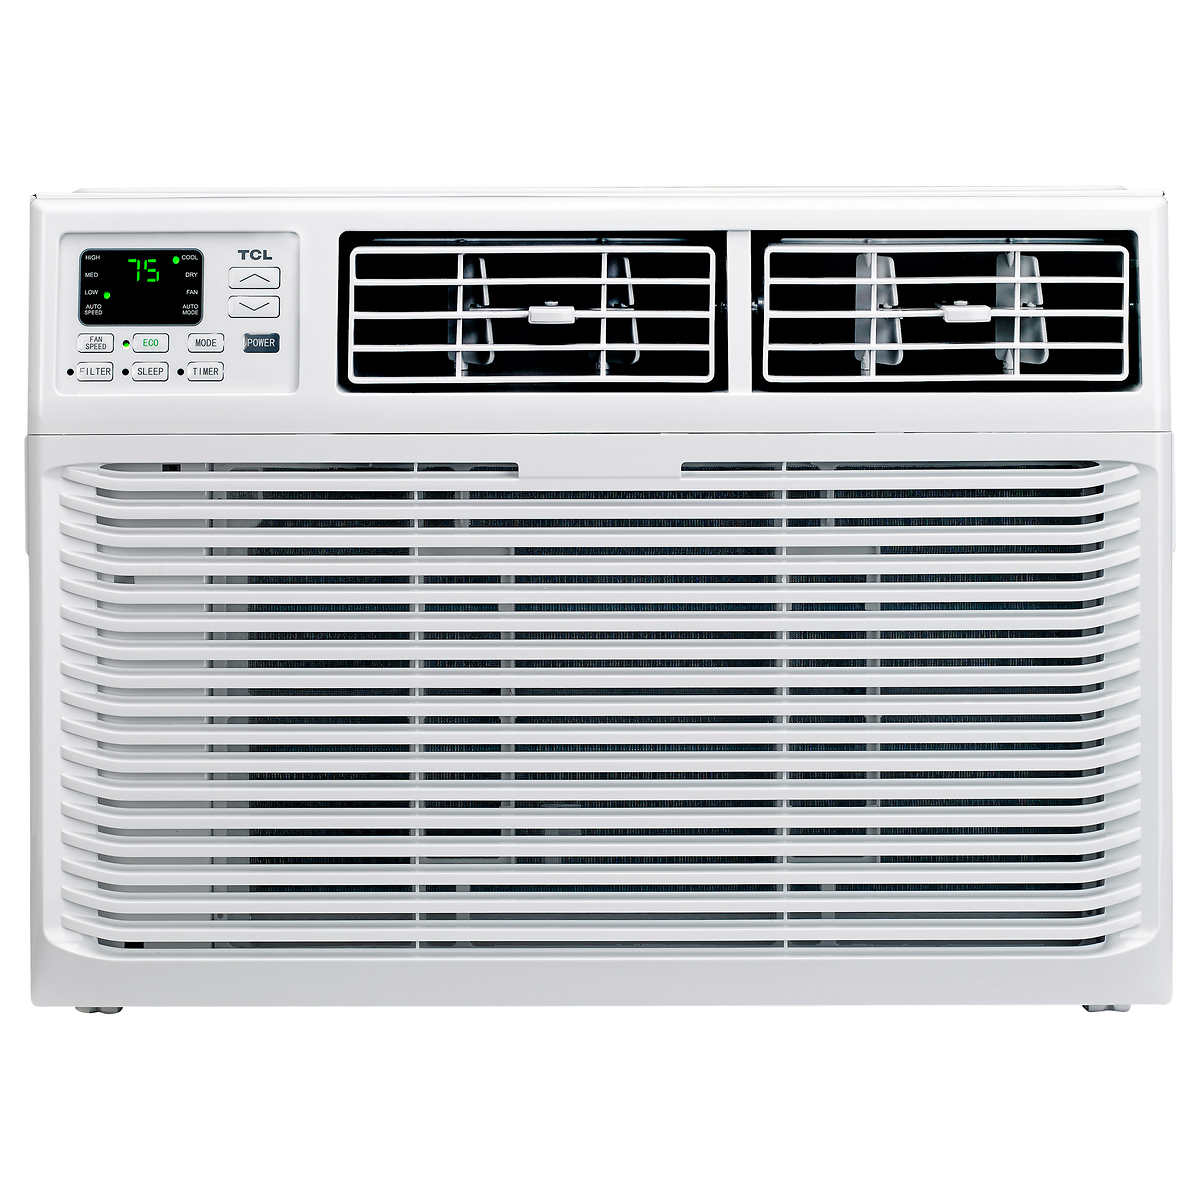 Tcl 15 000 Btu Window Air Conditioner Costco